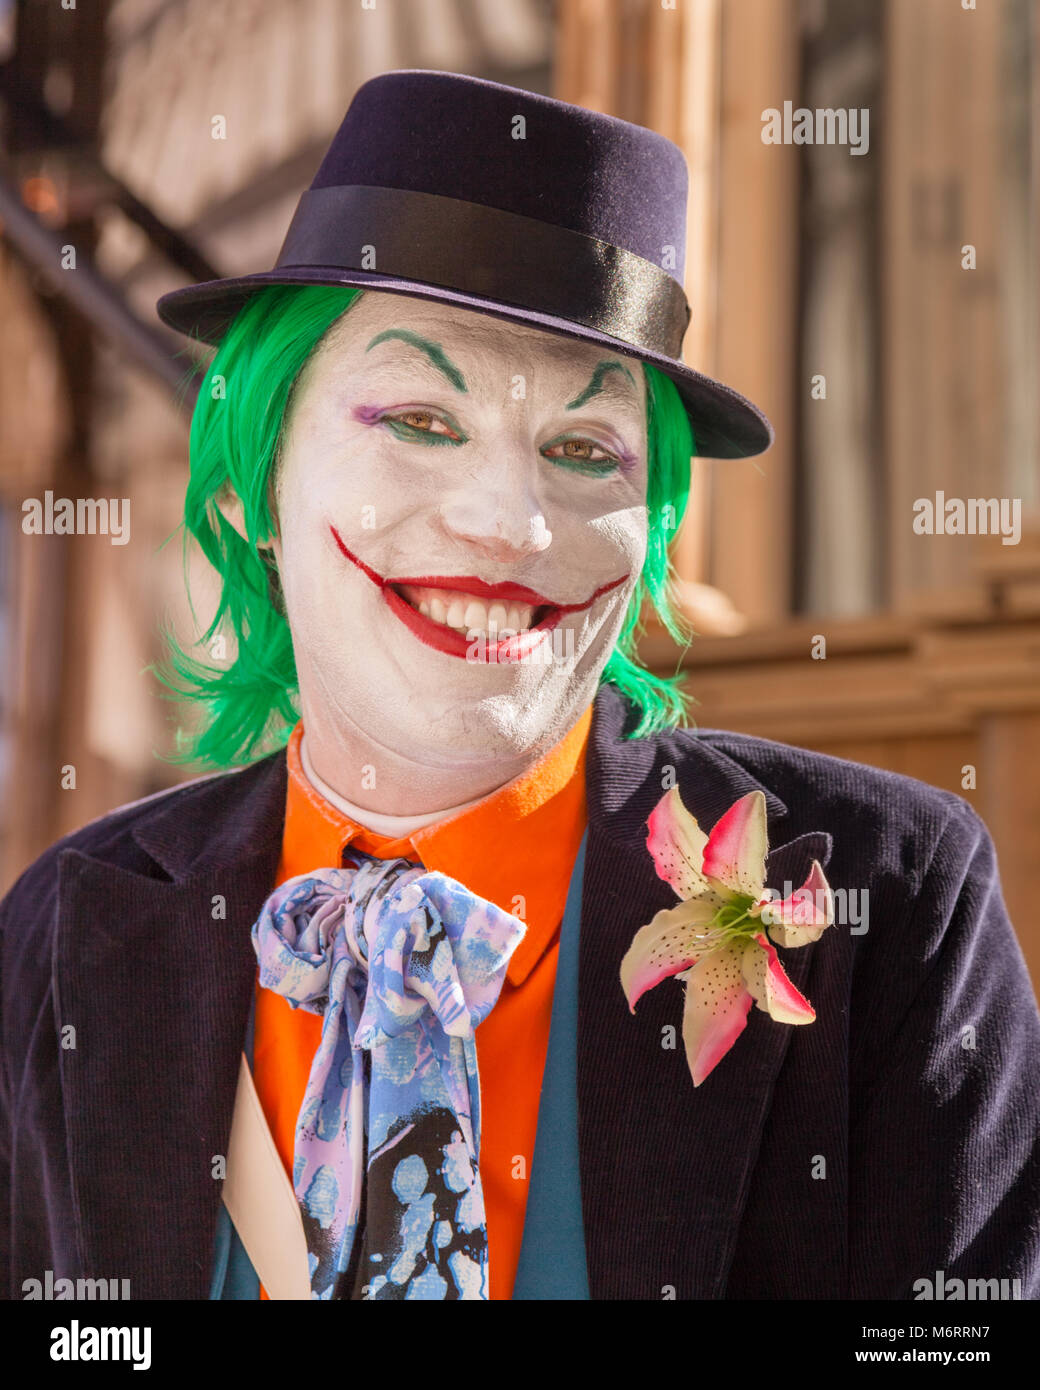 Clown face, participant in fancy dress costume as 'The Joker' from Batman, smiles at the Venice Carnival, Carnivale di Venezia, Veneto, Italy Stock Photo